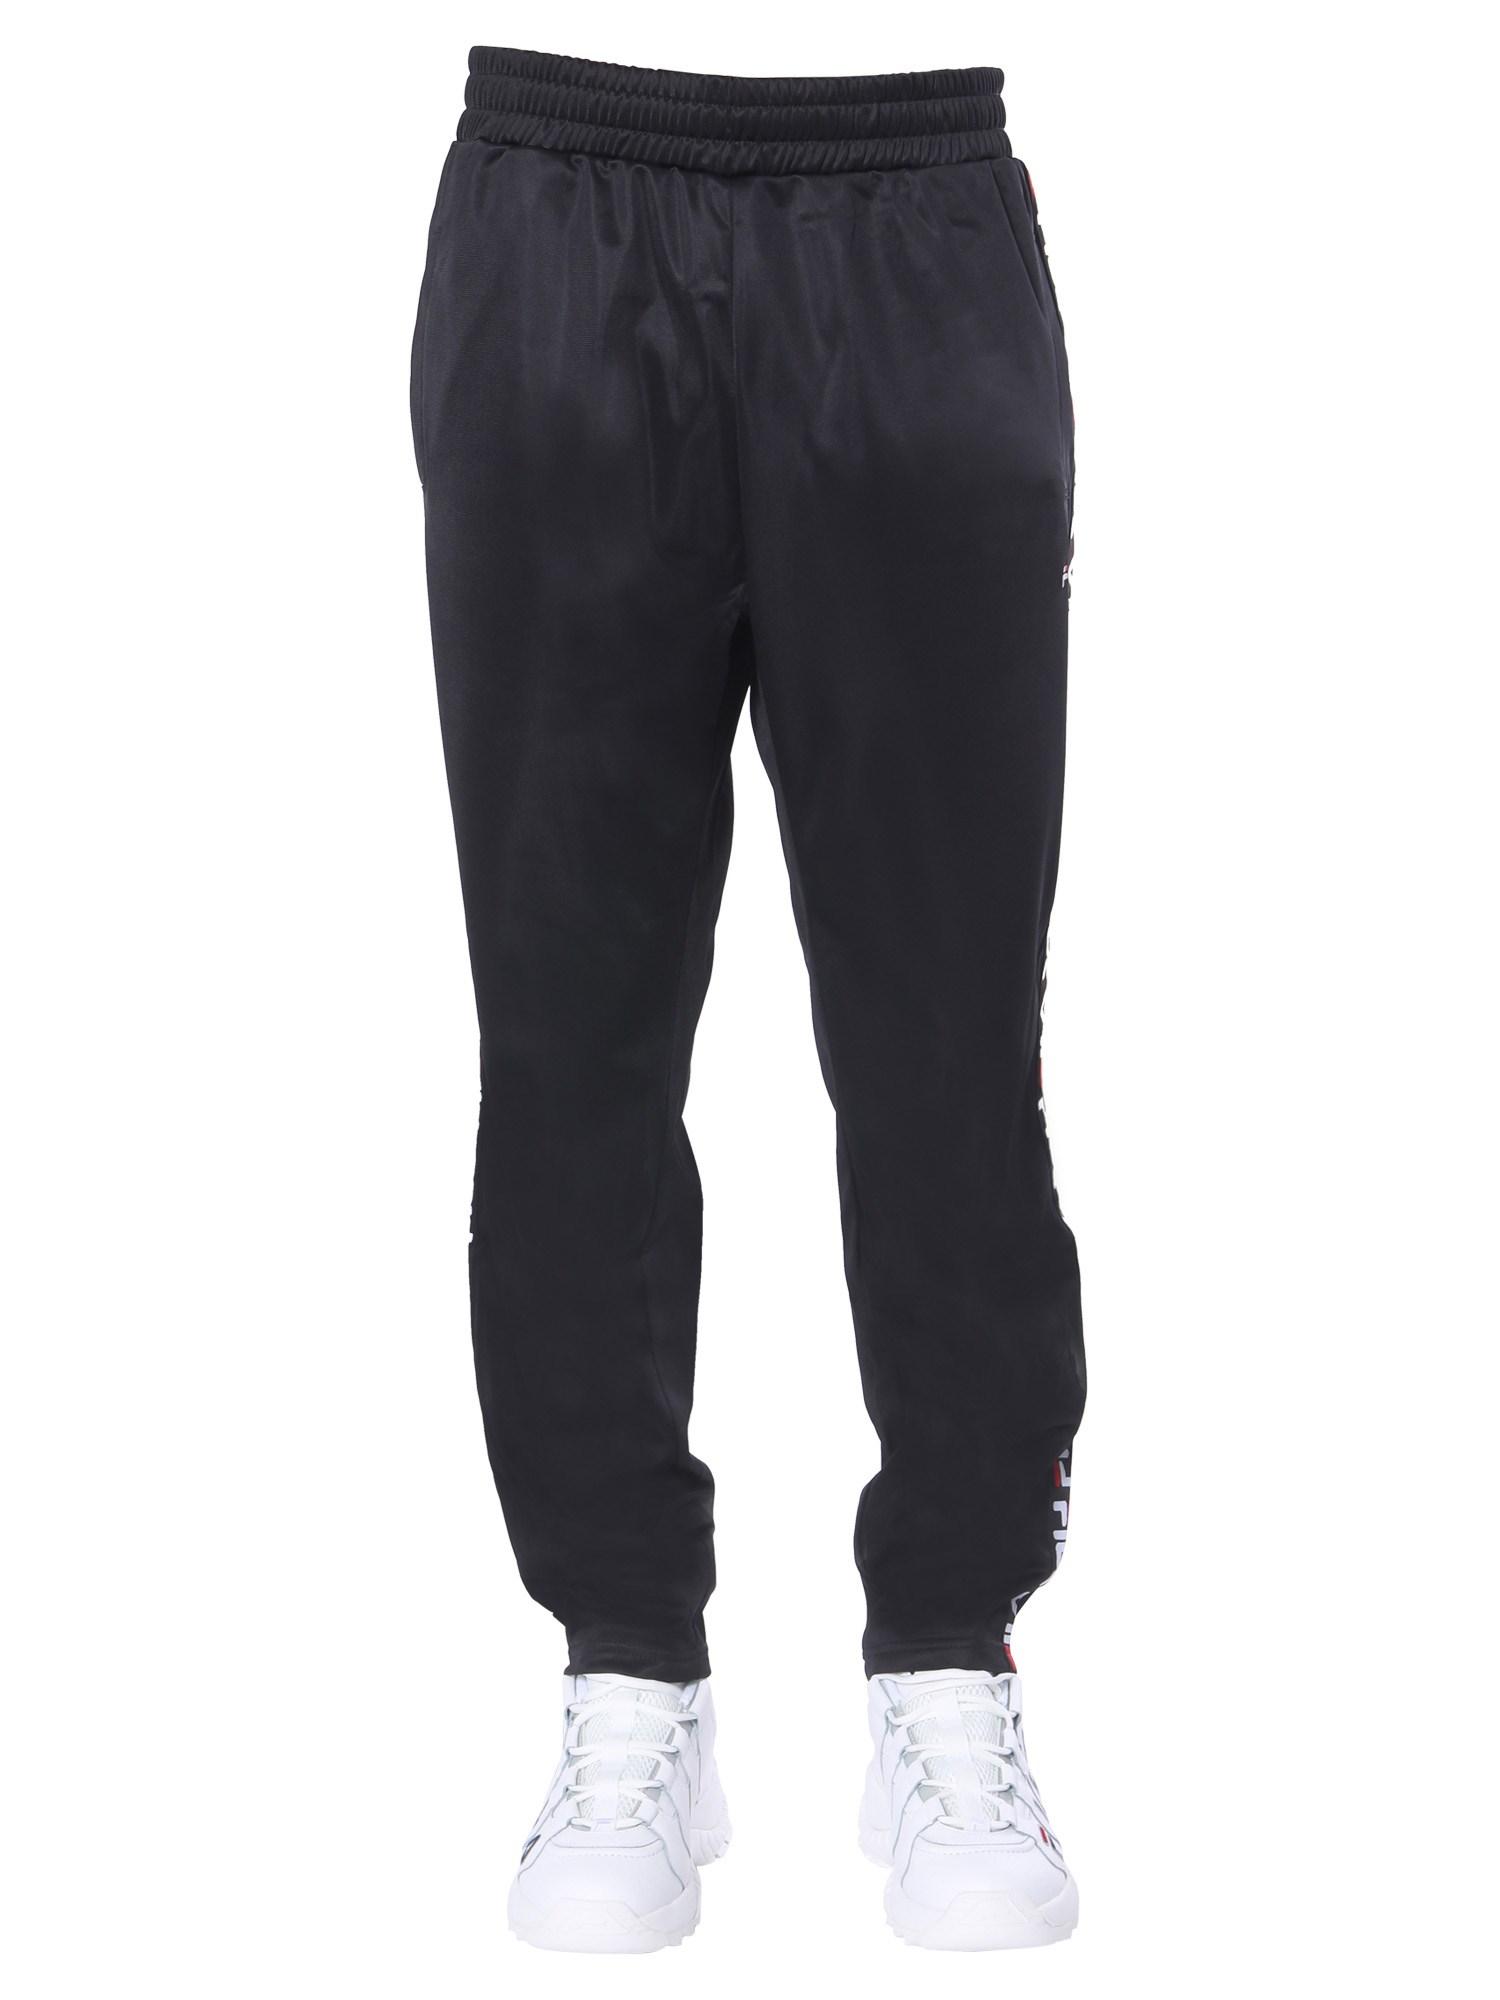 Fila Synthetic jogging Pants in Black for Men - Lyst